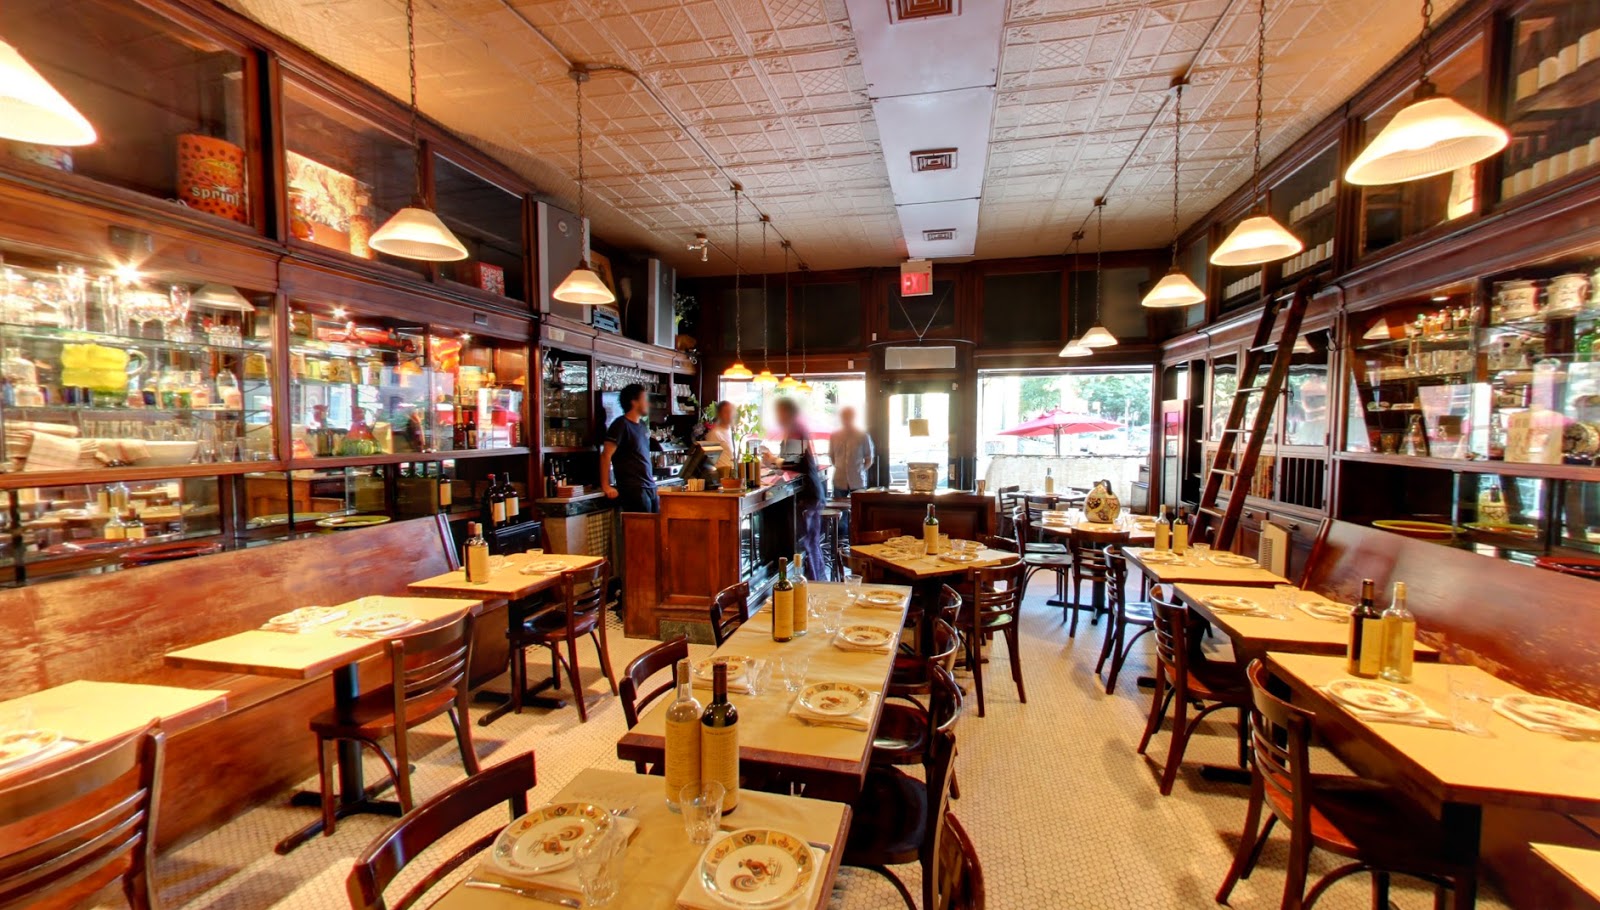 Photo of Locanda Vini & Olii in Brooklyn City, New York, United States - 3 Picture of Restaurant, Food, Point of interest, Establishment, Bar